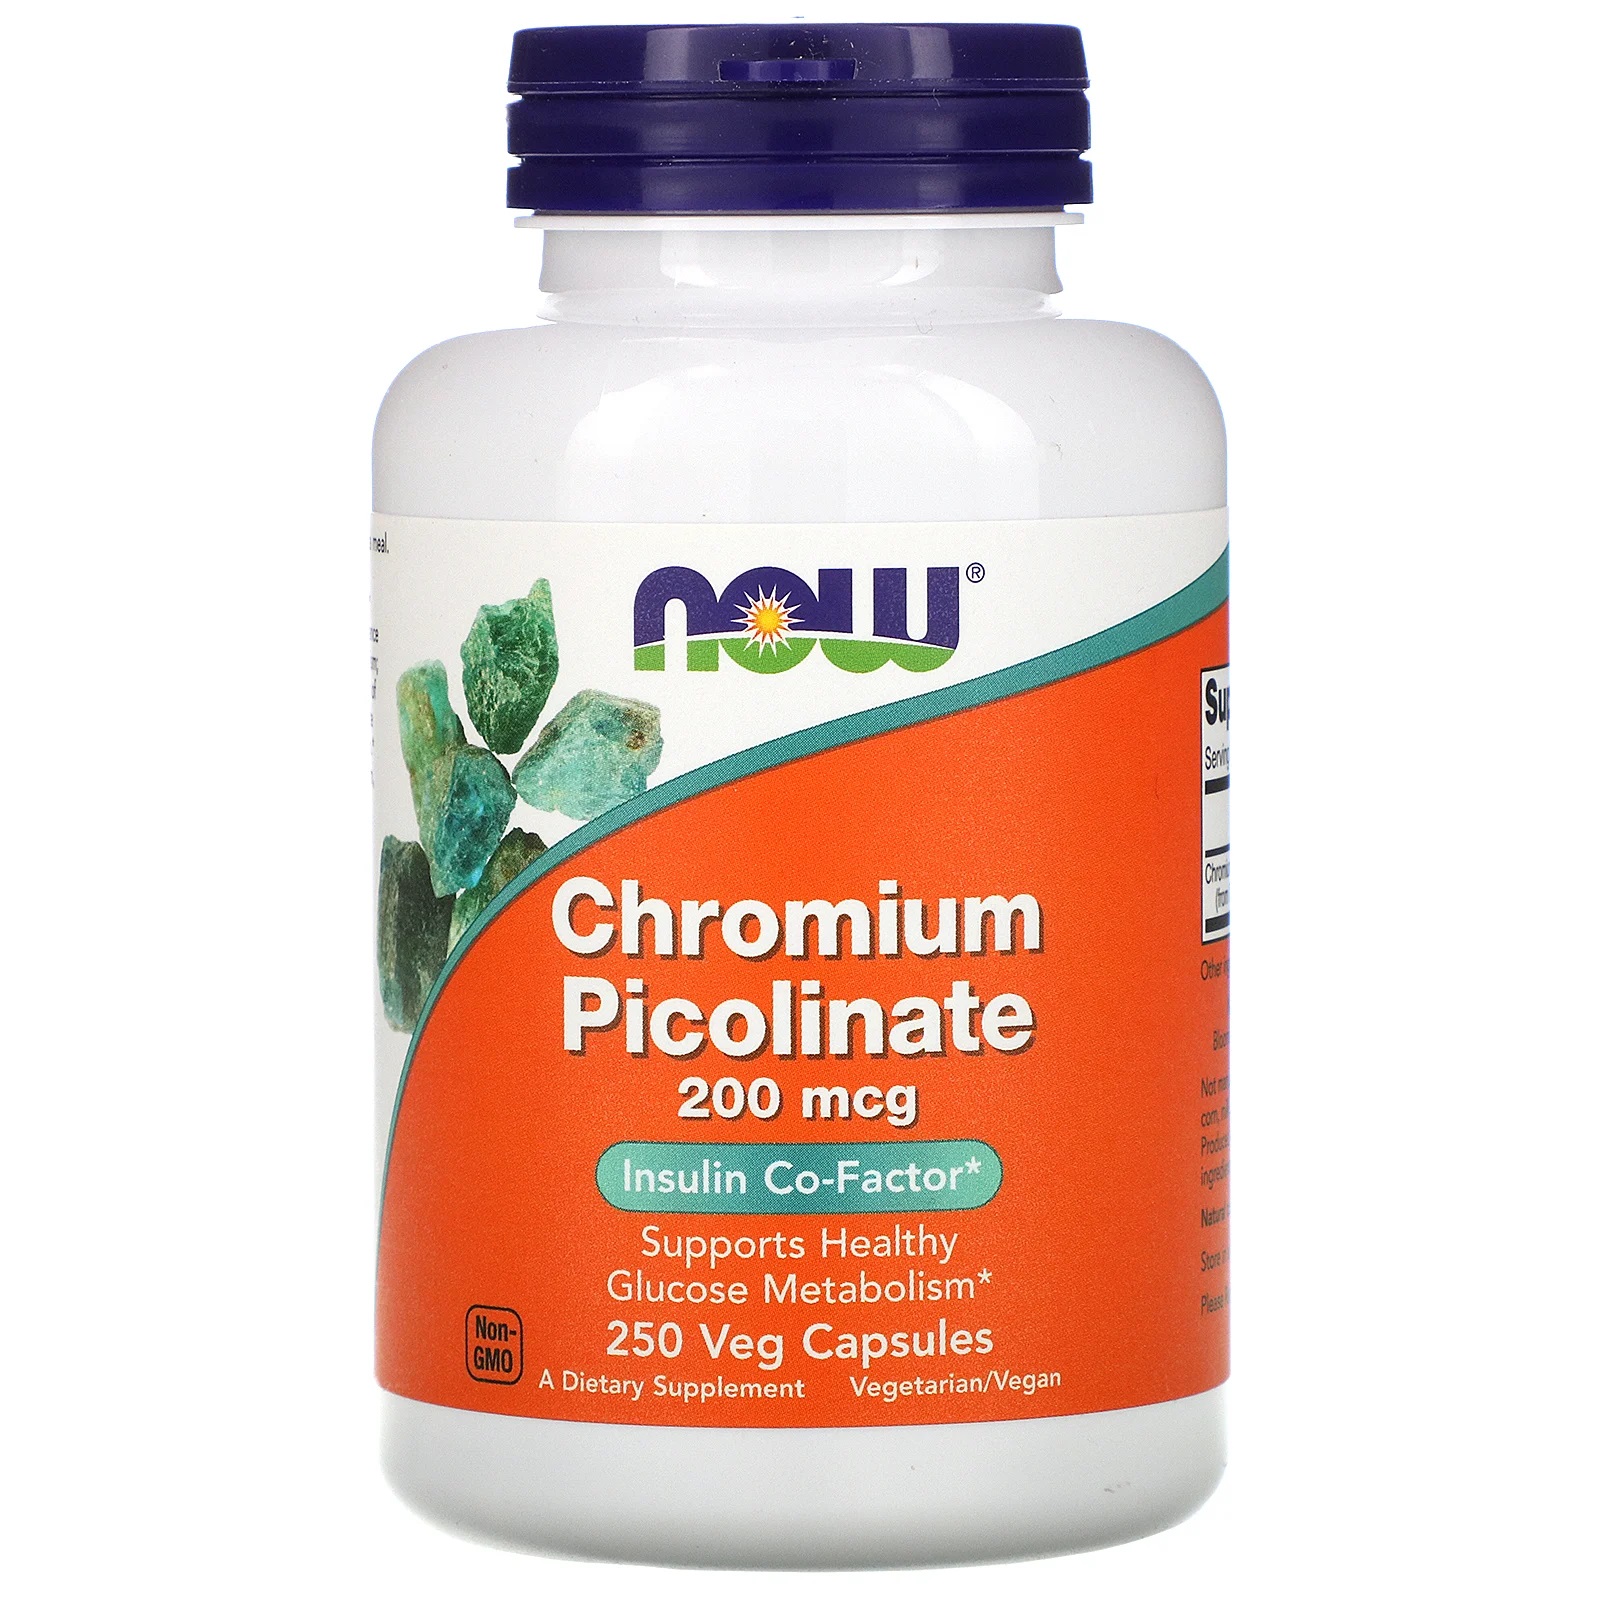 chromium picolinate weight loss reddit